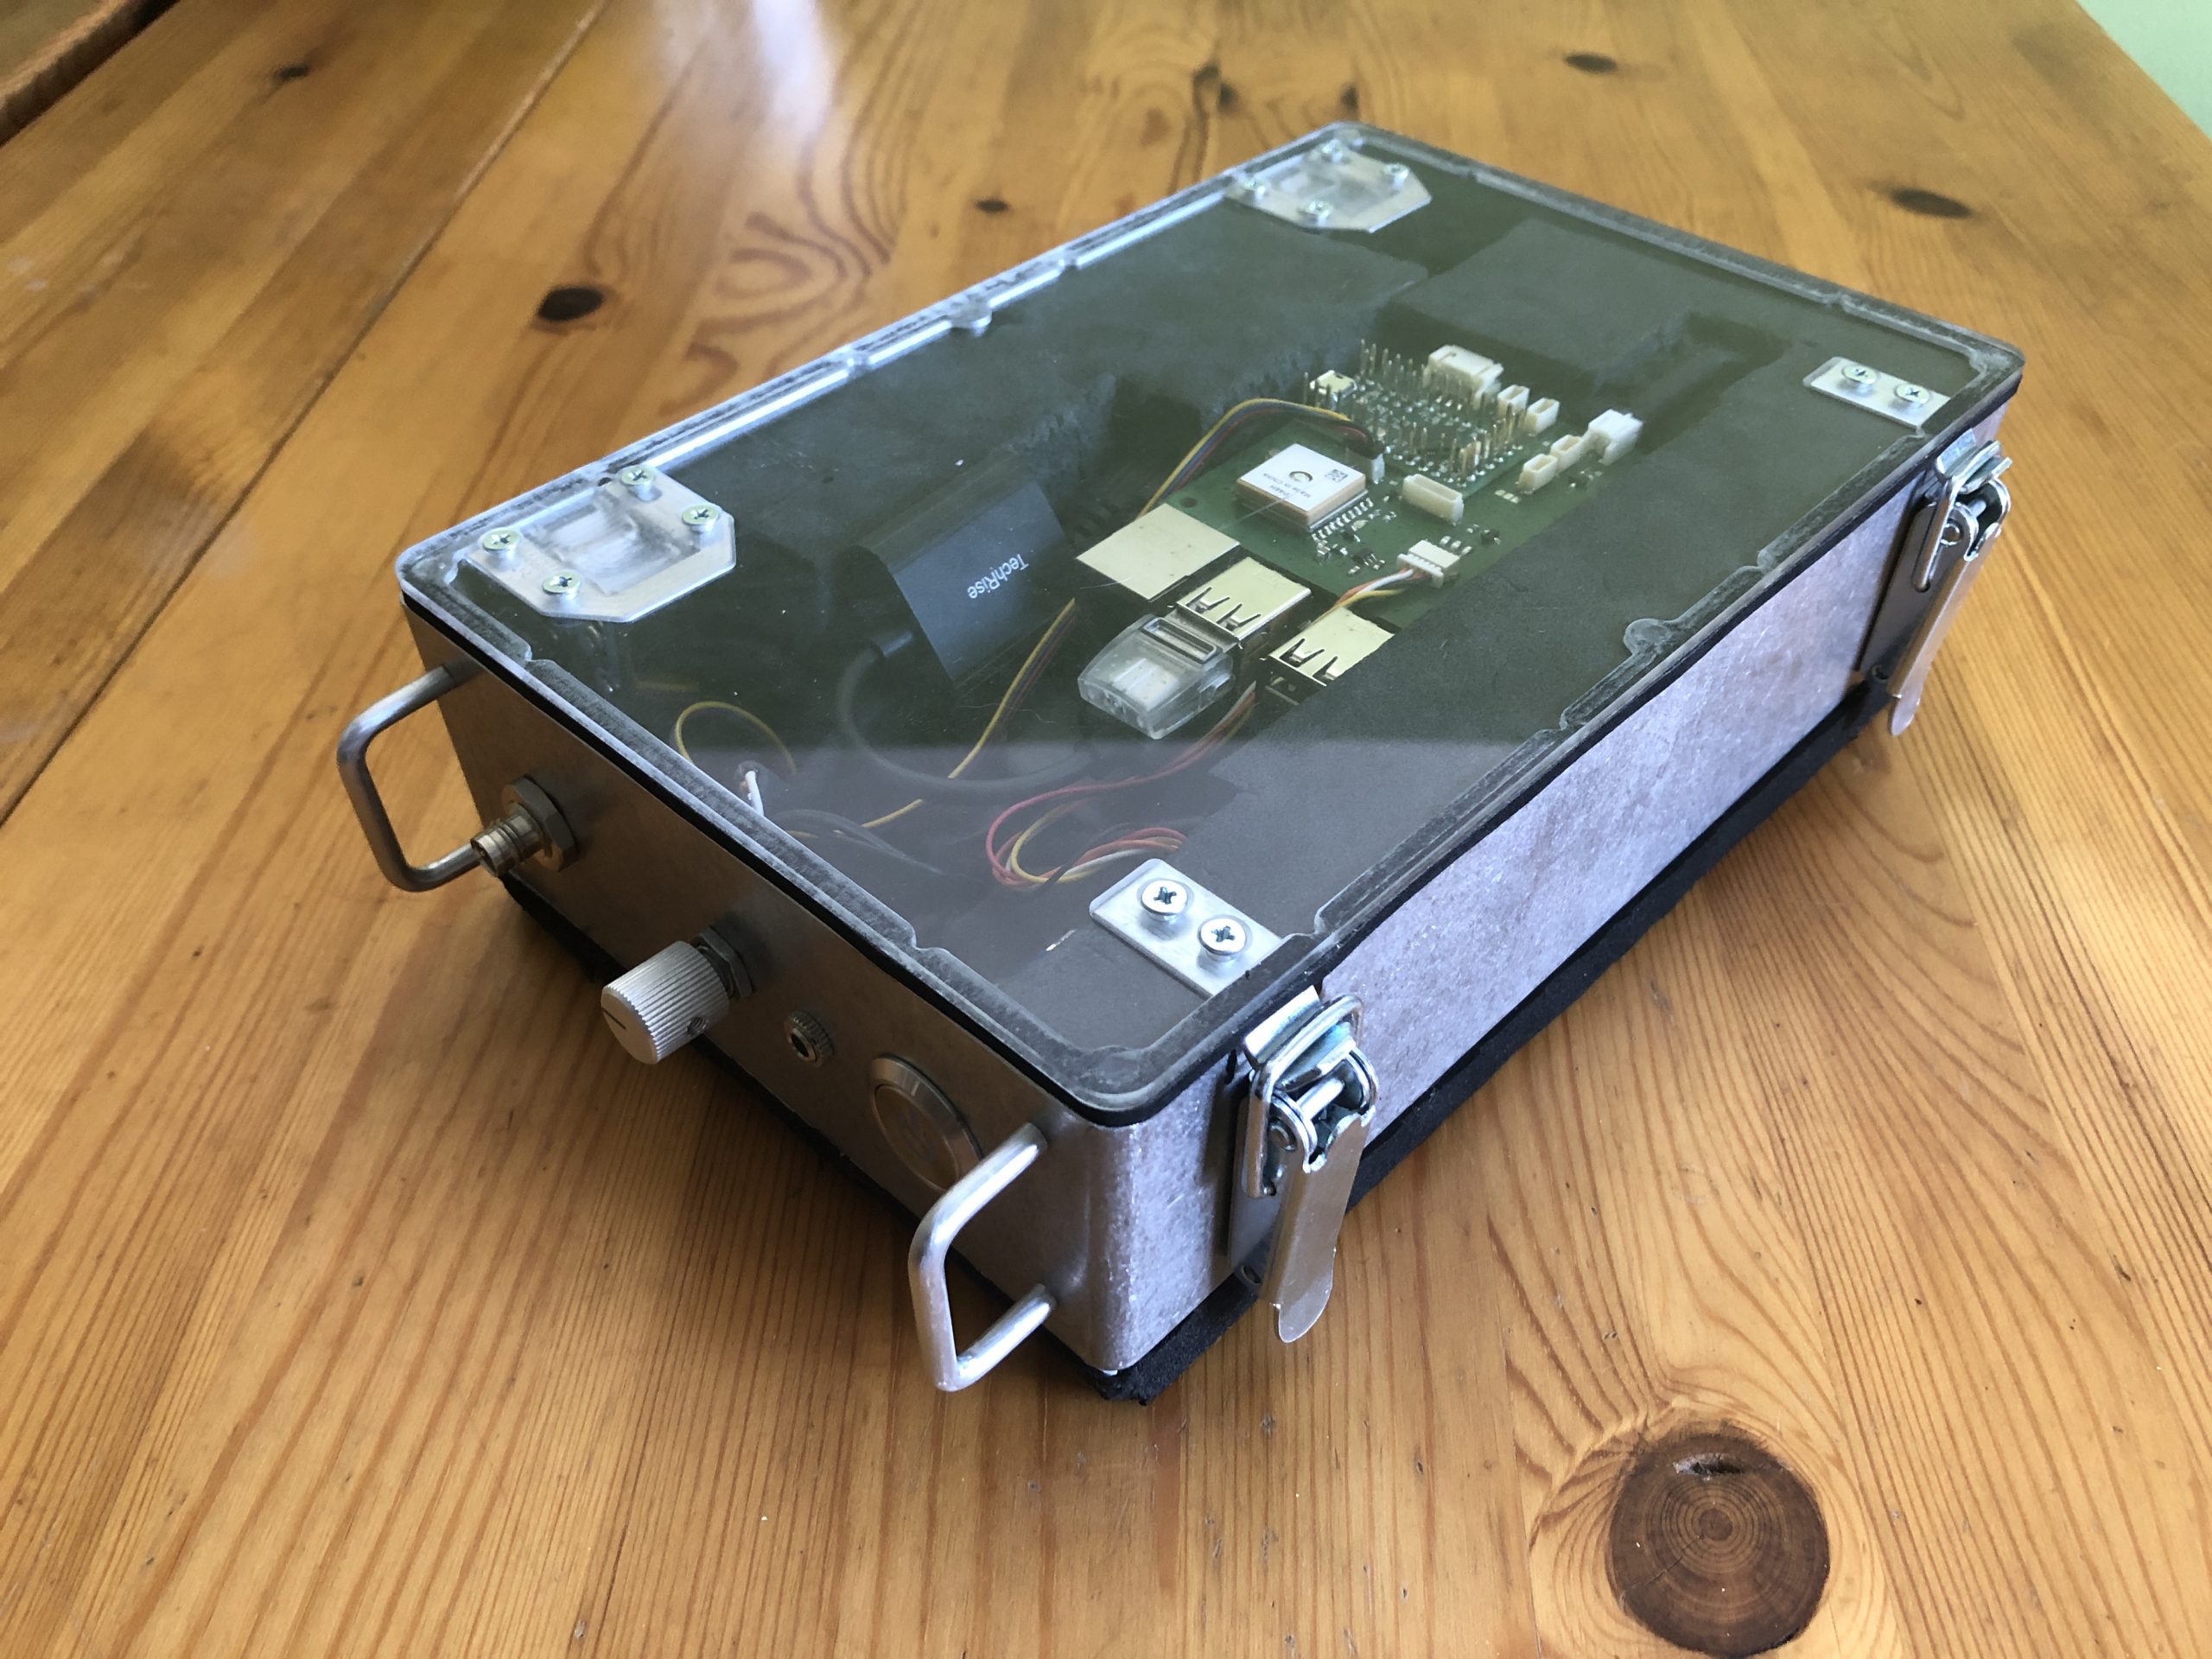 Enviro Bike kit - metalic box with clear lid showing electronic hardware inside